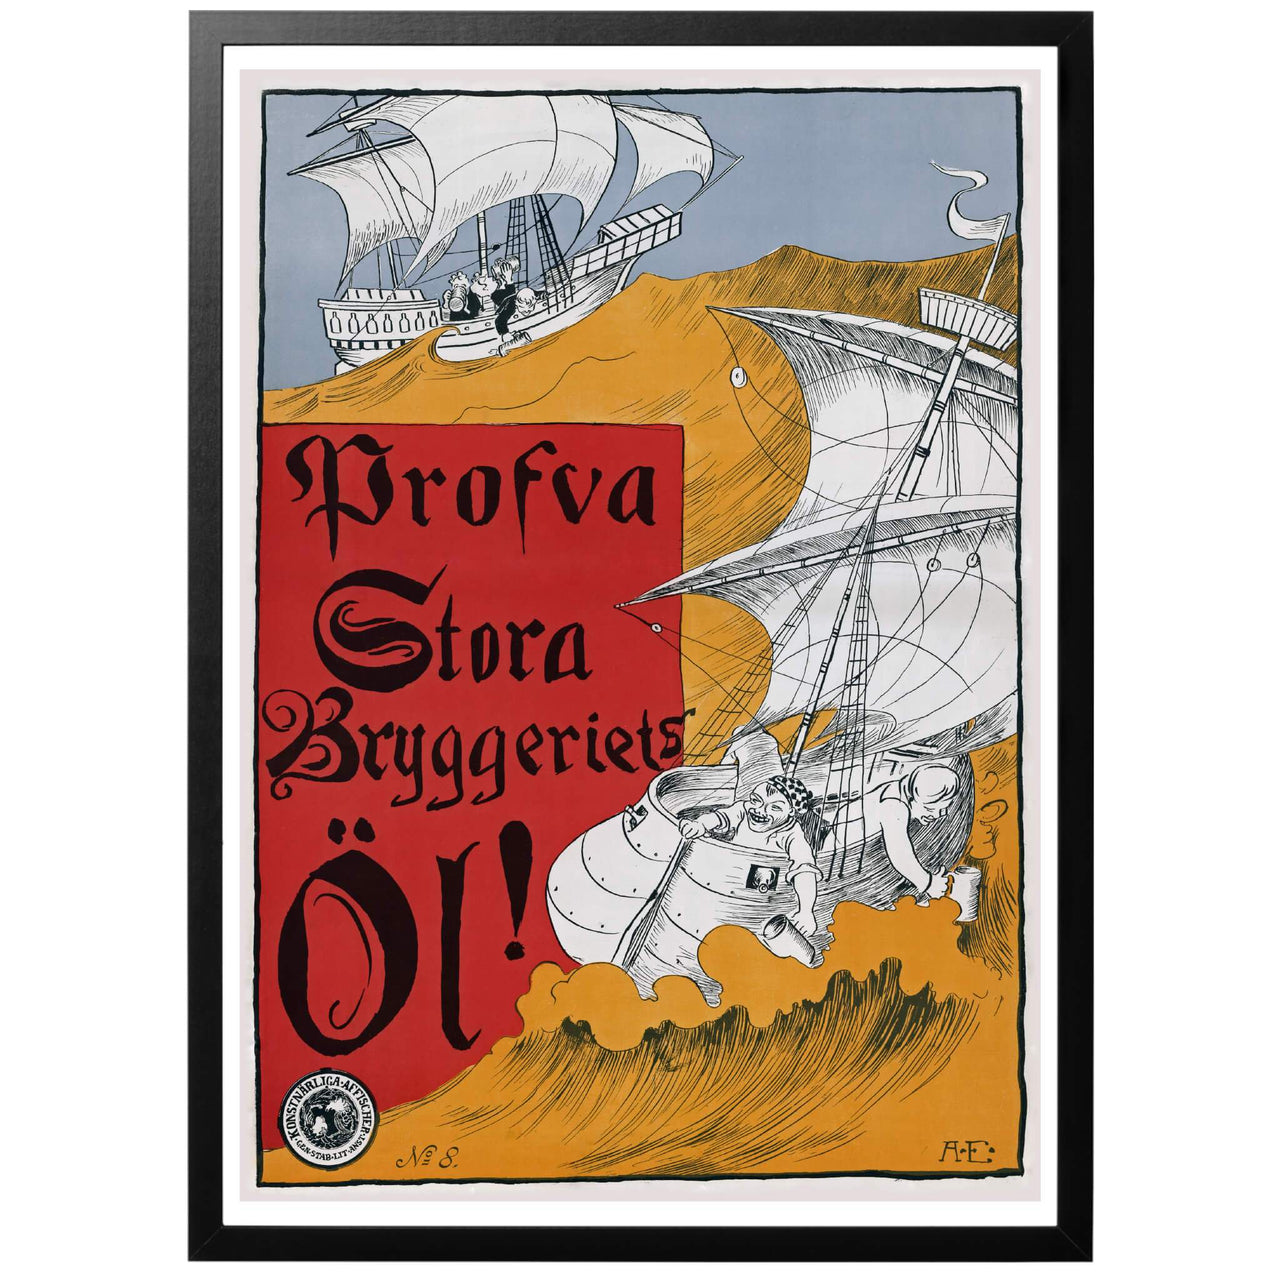 Profva Stora bryggeriets öl! - Albert Engström Poster